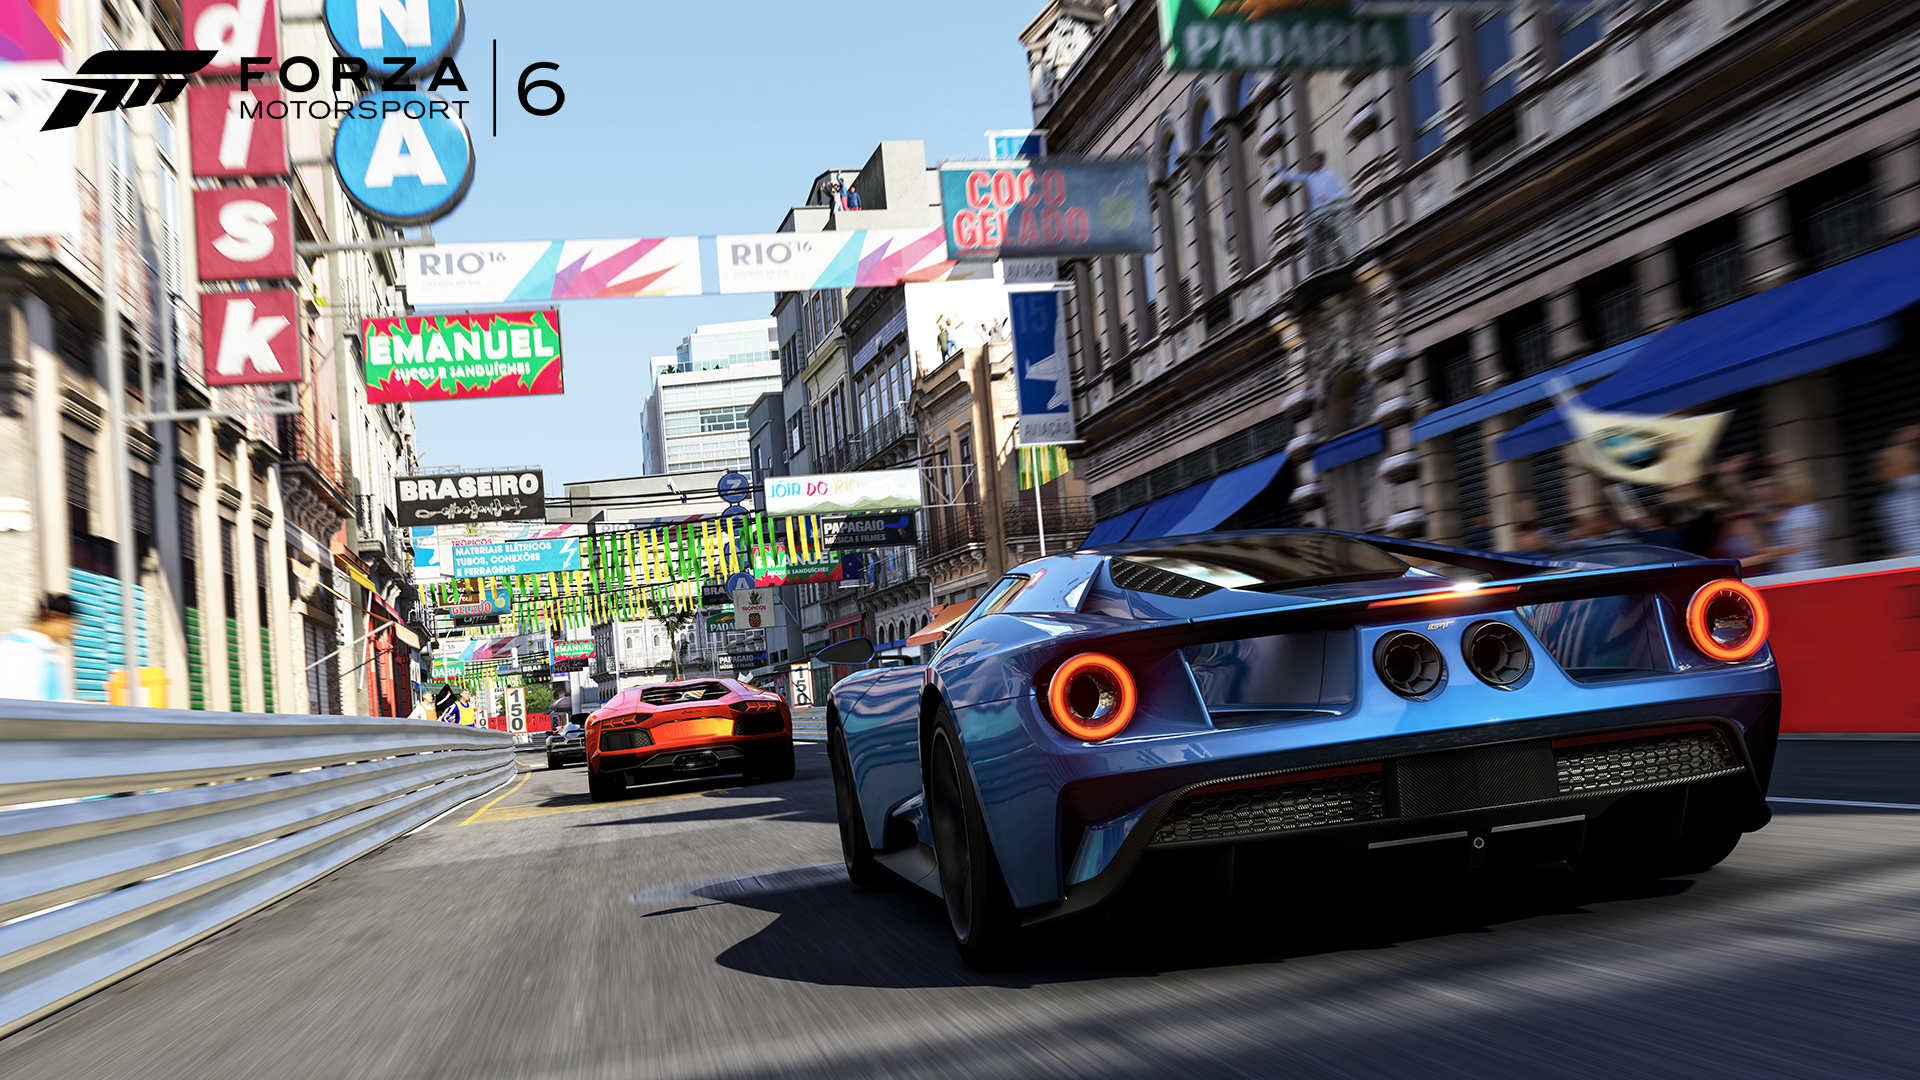 Forza Motorsport 6: Apex Wallpapers